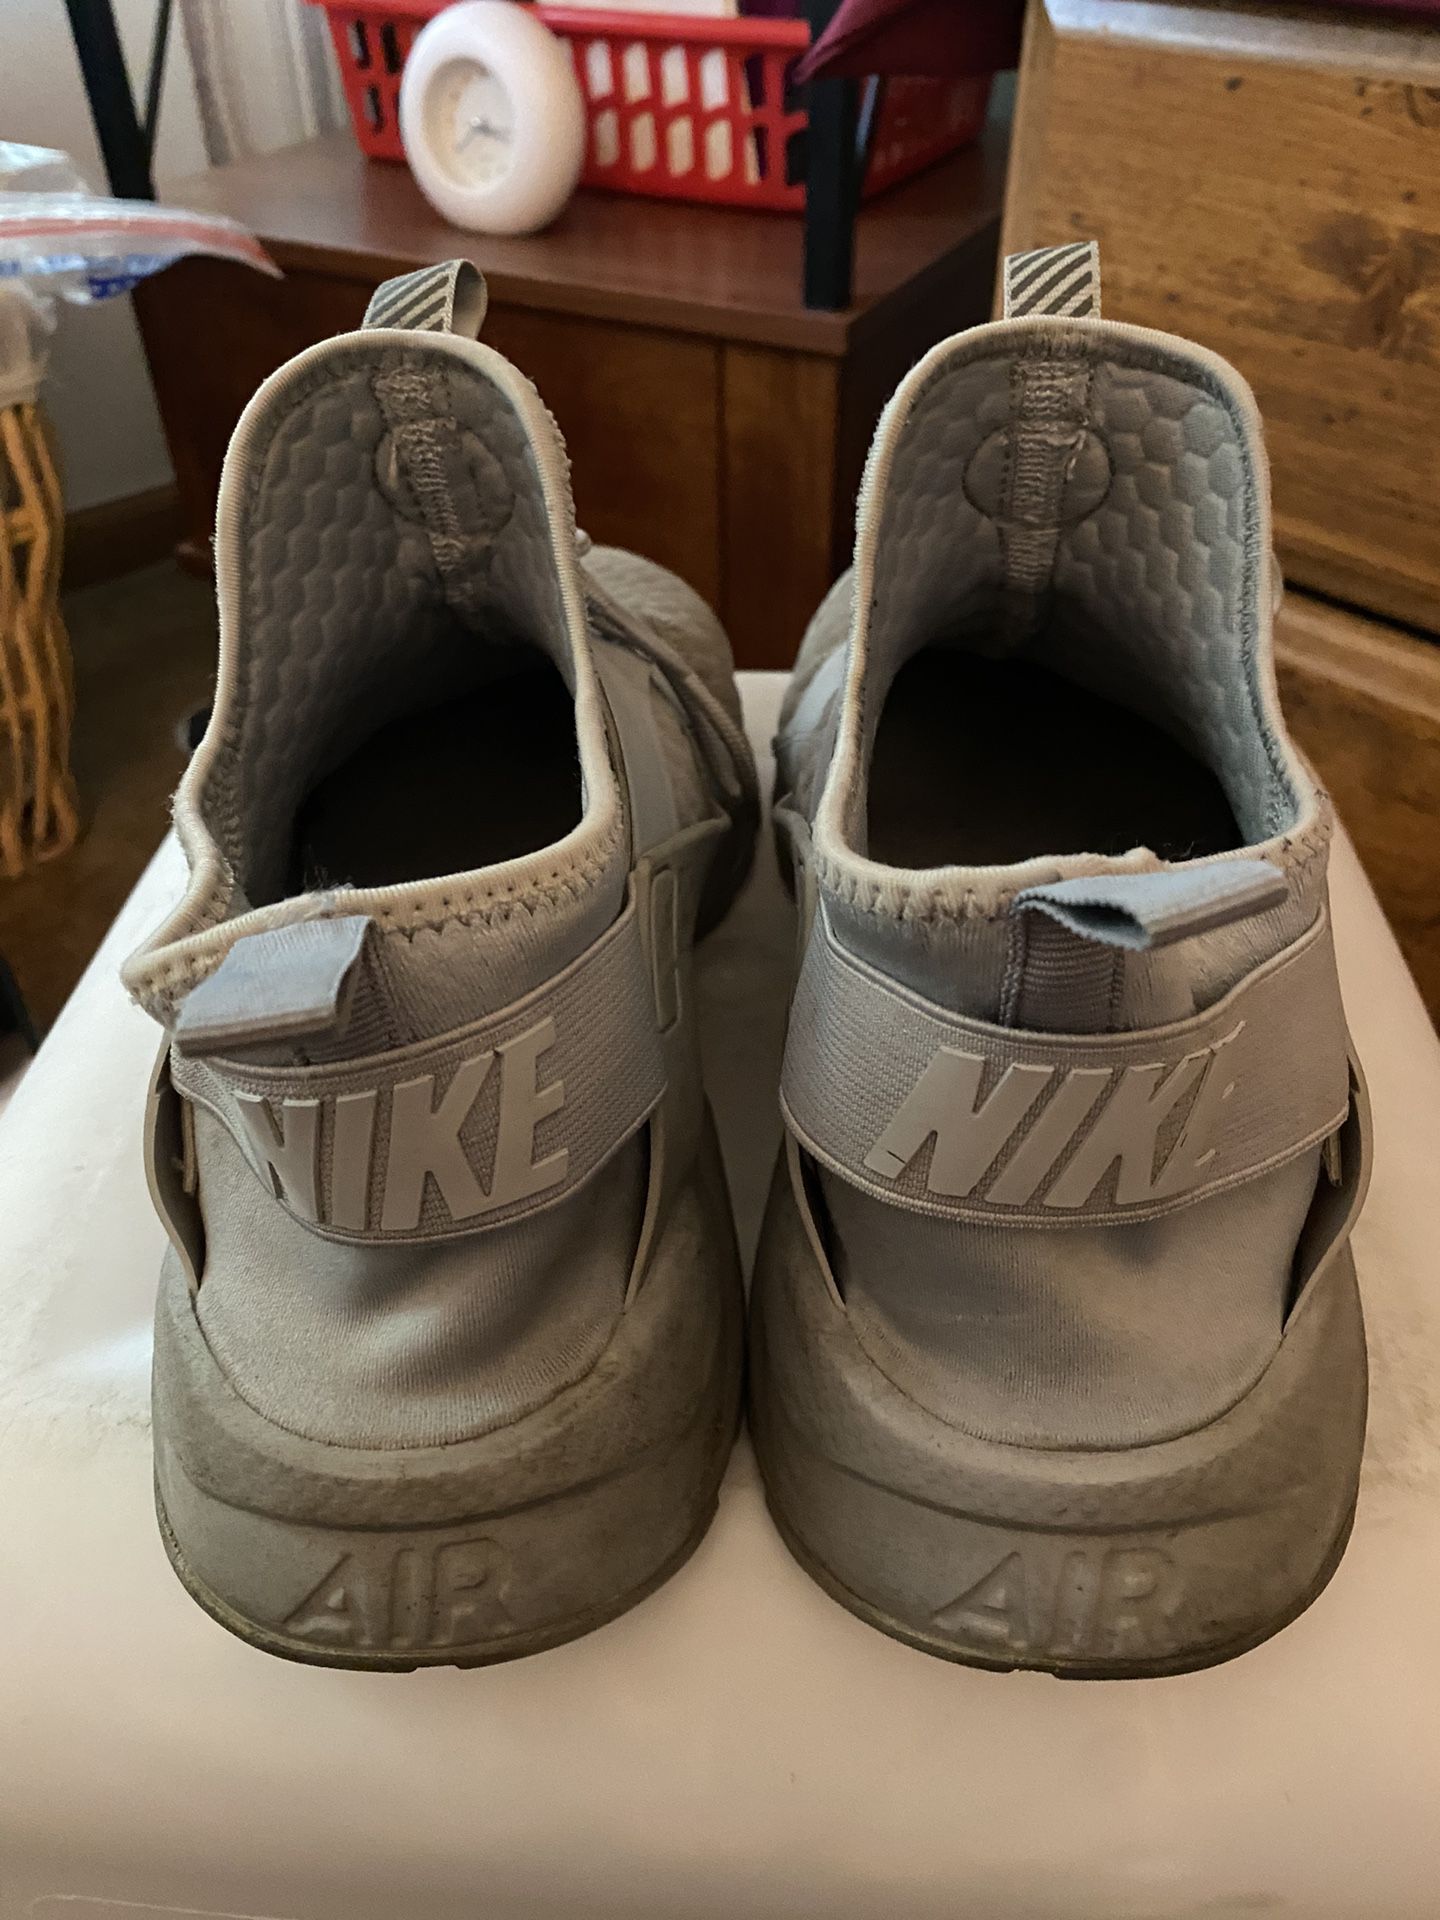 Nike Shoes Size 12 35$